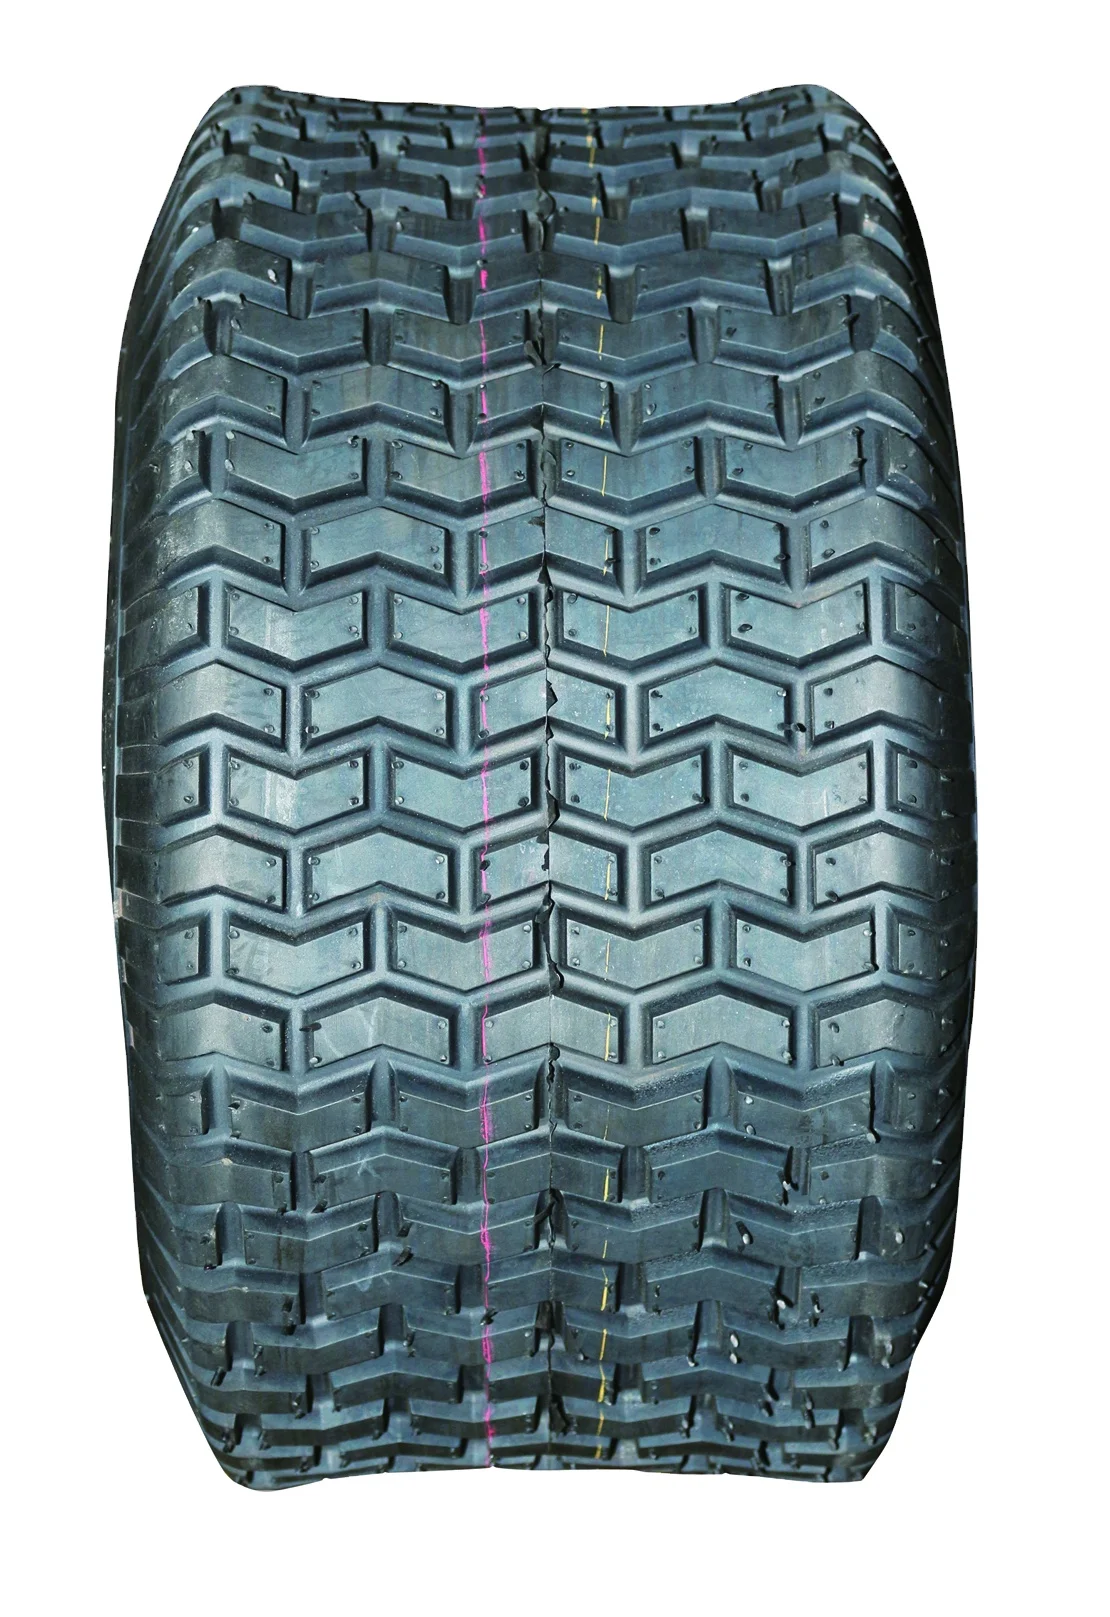 
Purchase ALL TERRAIN TIRE 25X8-12 ATV tire for sales 